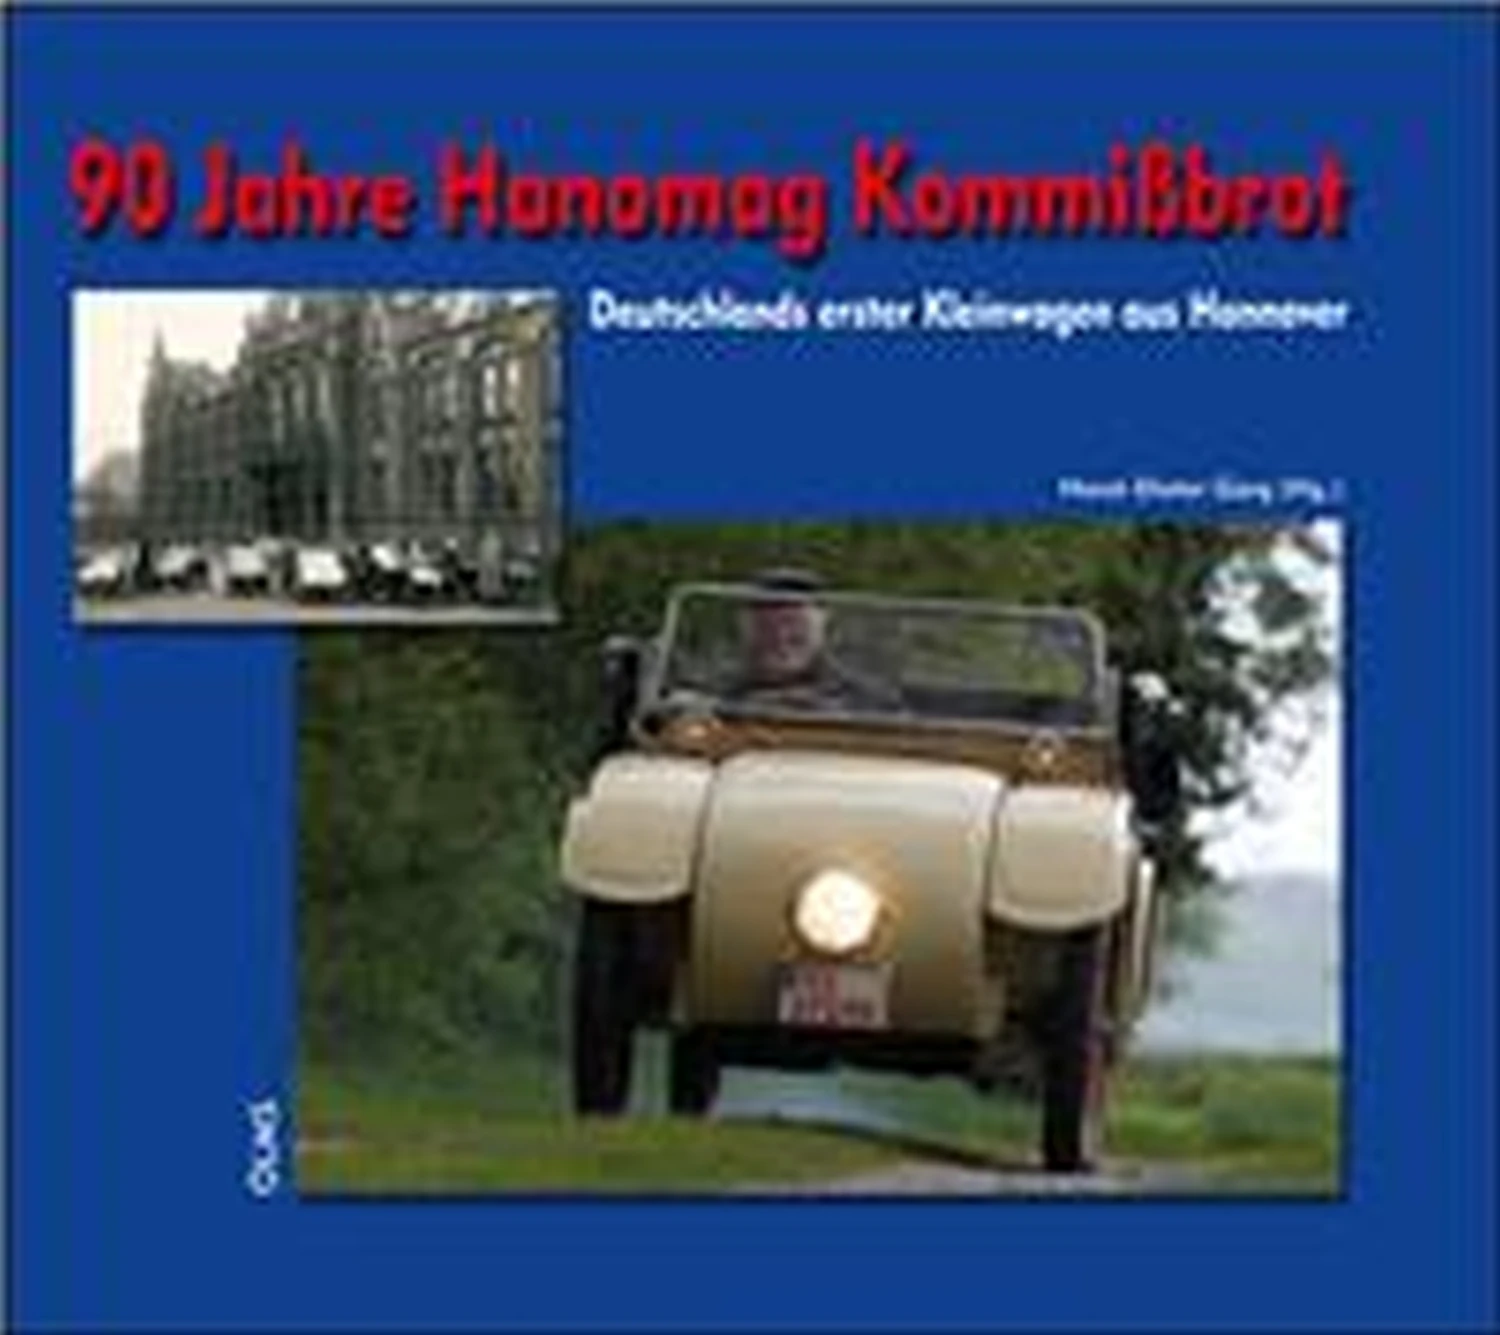 90 Jahre Hanomag Kommißbrot von Geoarg Olms AG 